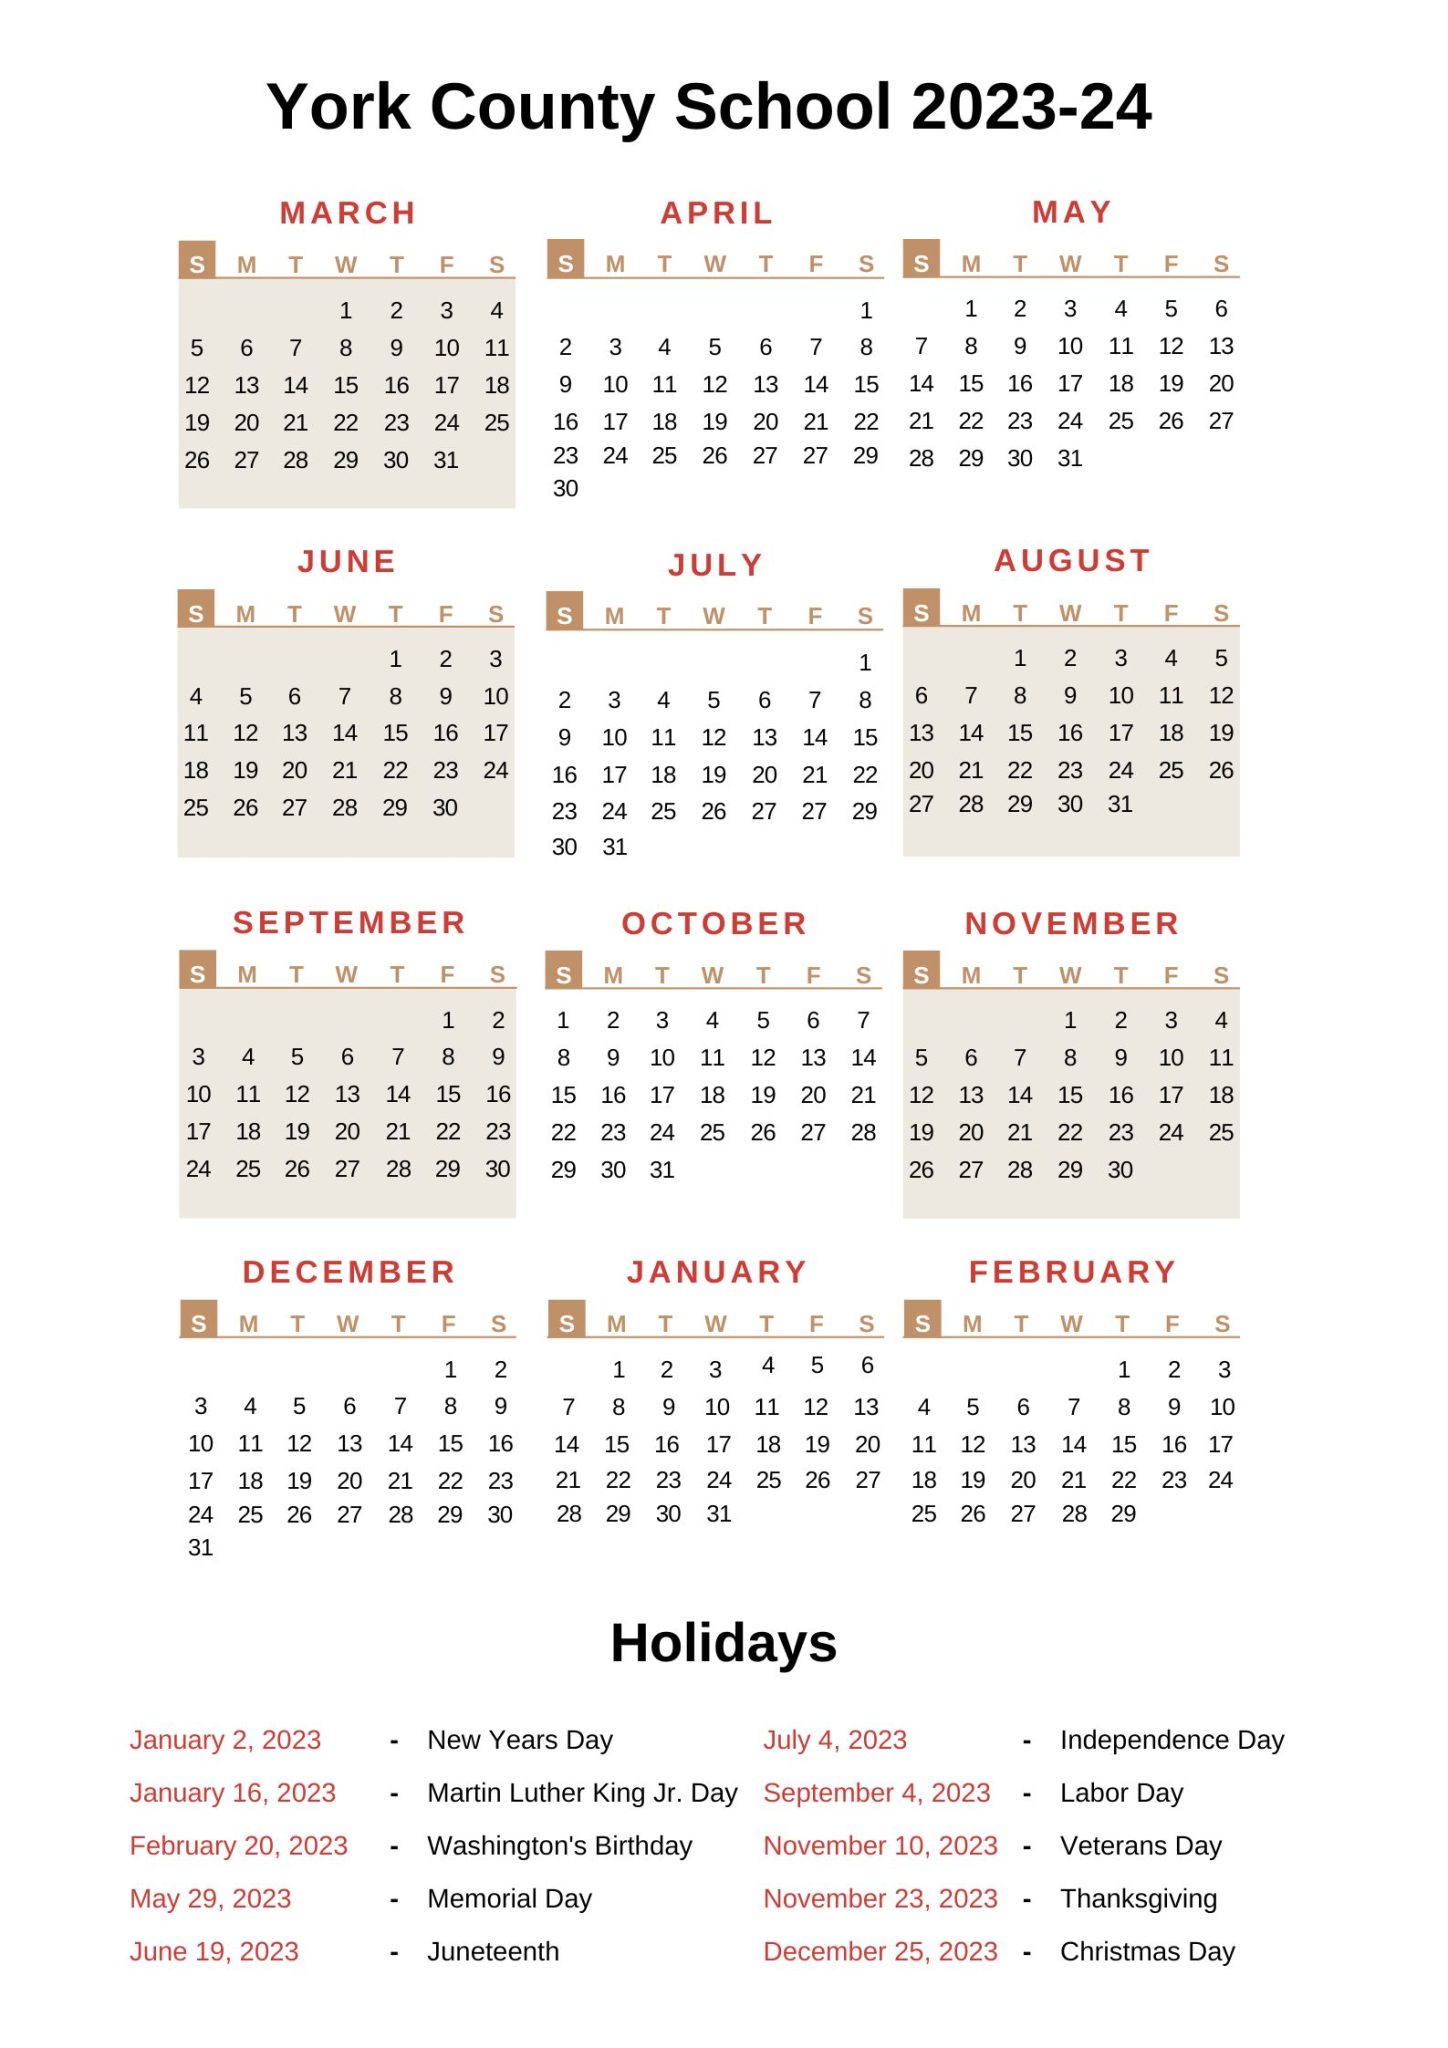 York County School Calendar 2023 24 with Holidays